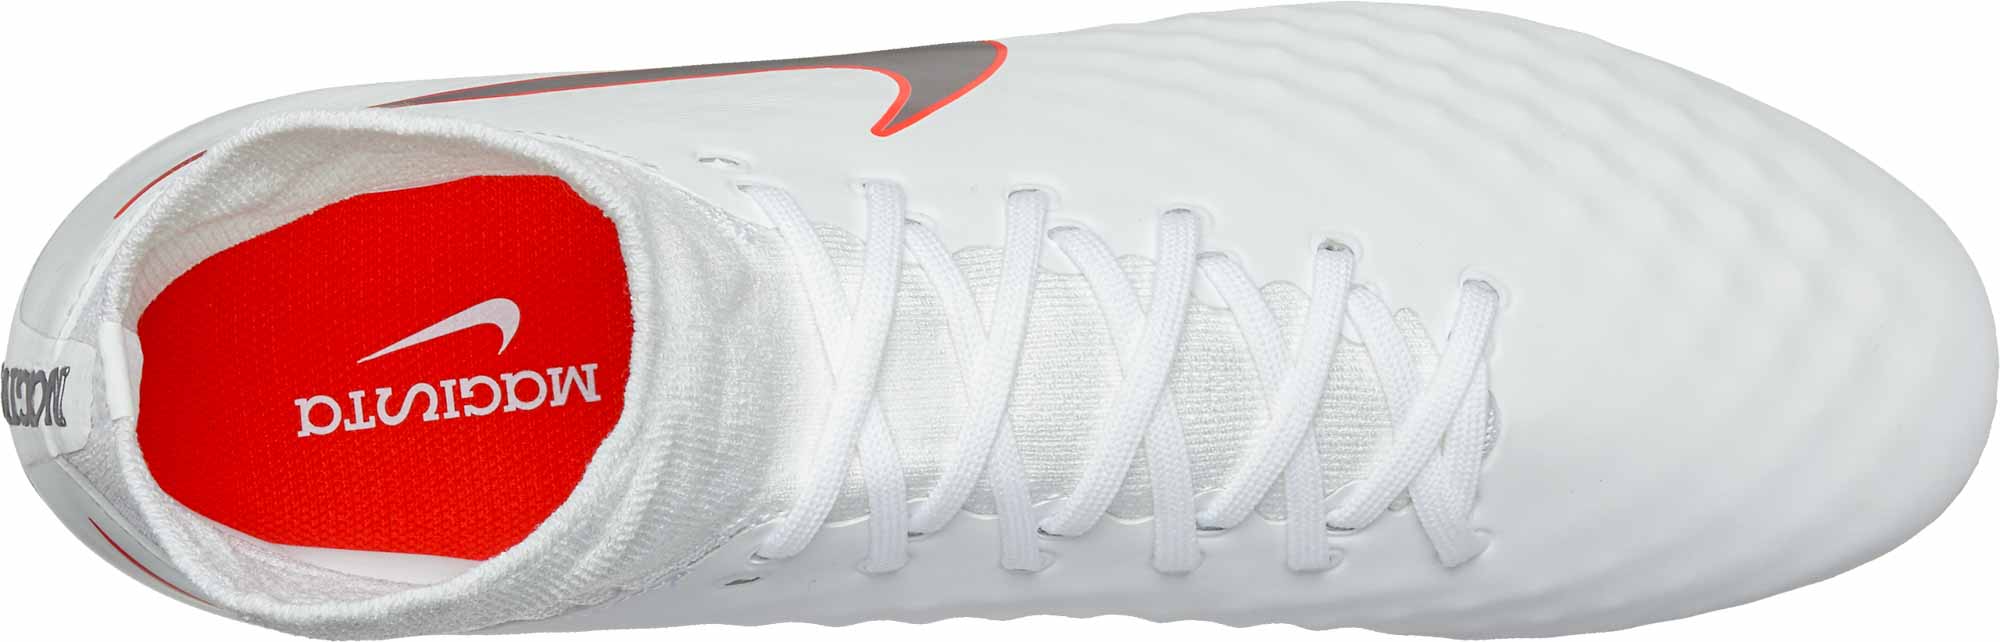 Arrivi Fg Obra Scarpe Magista Nuovi Nuove 2 Originale Nike